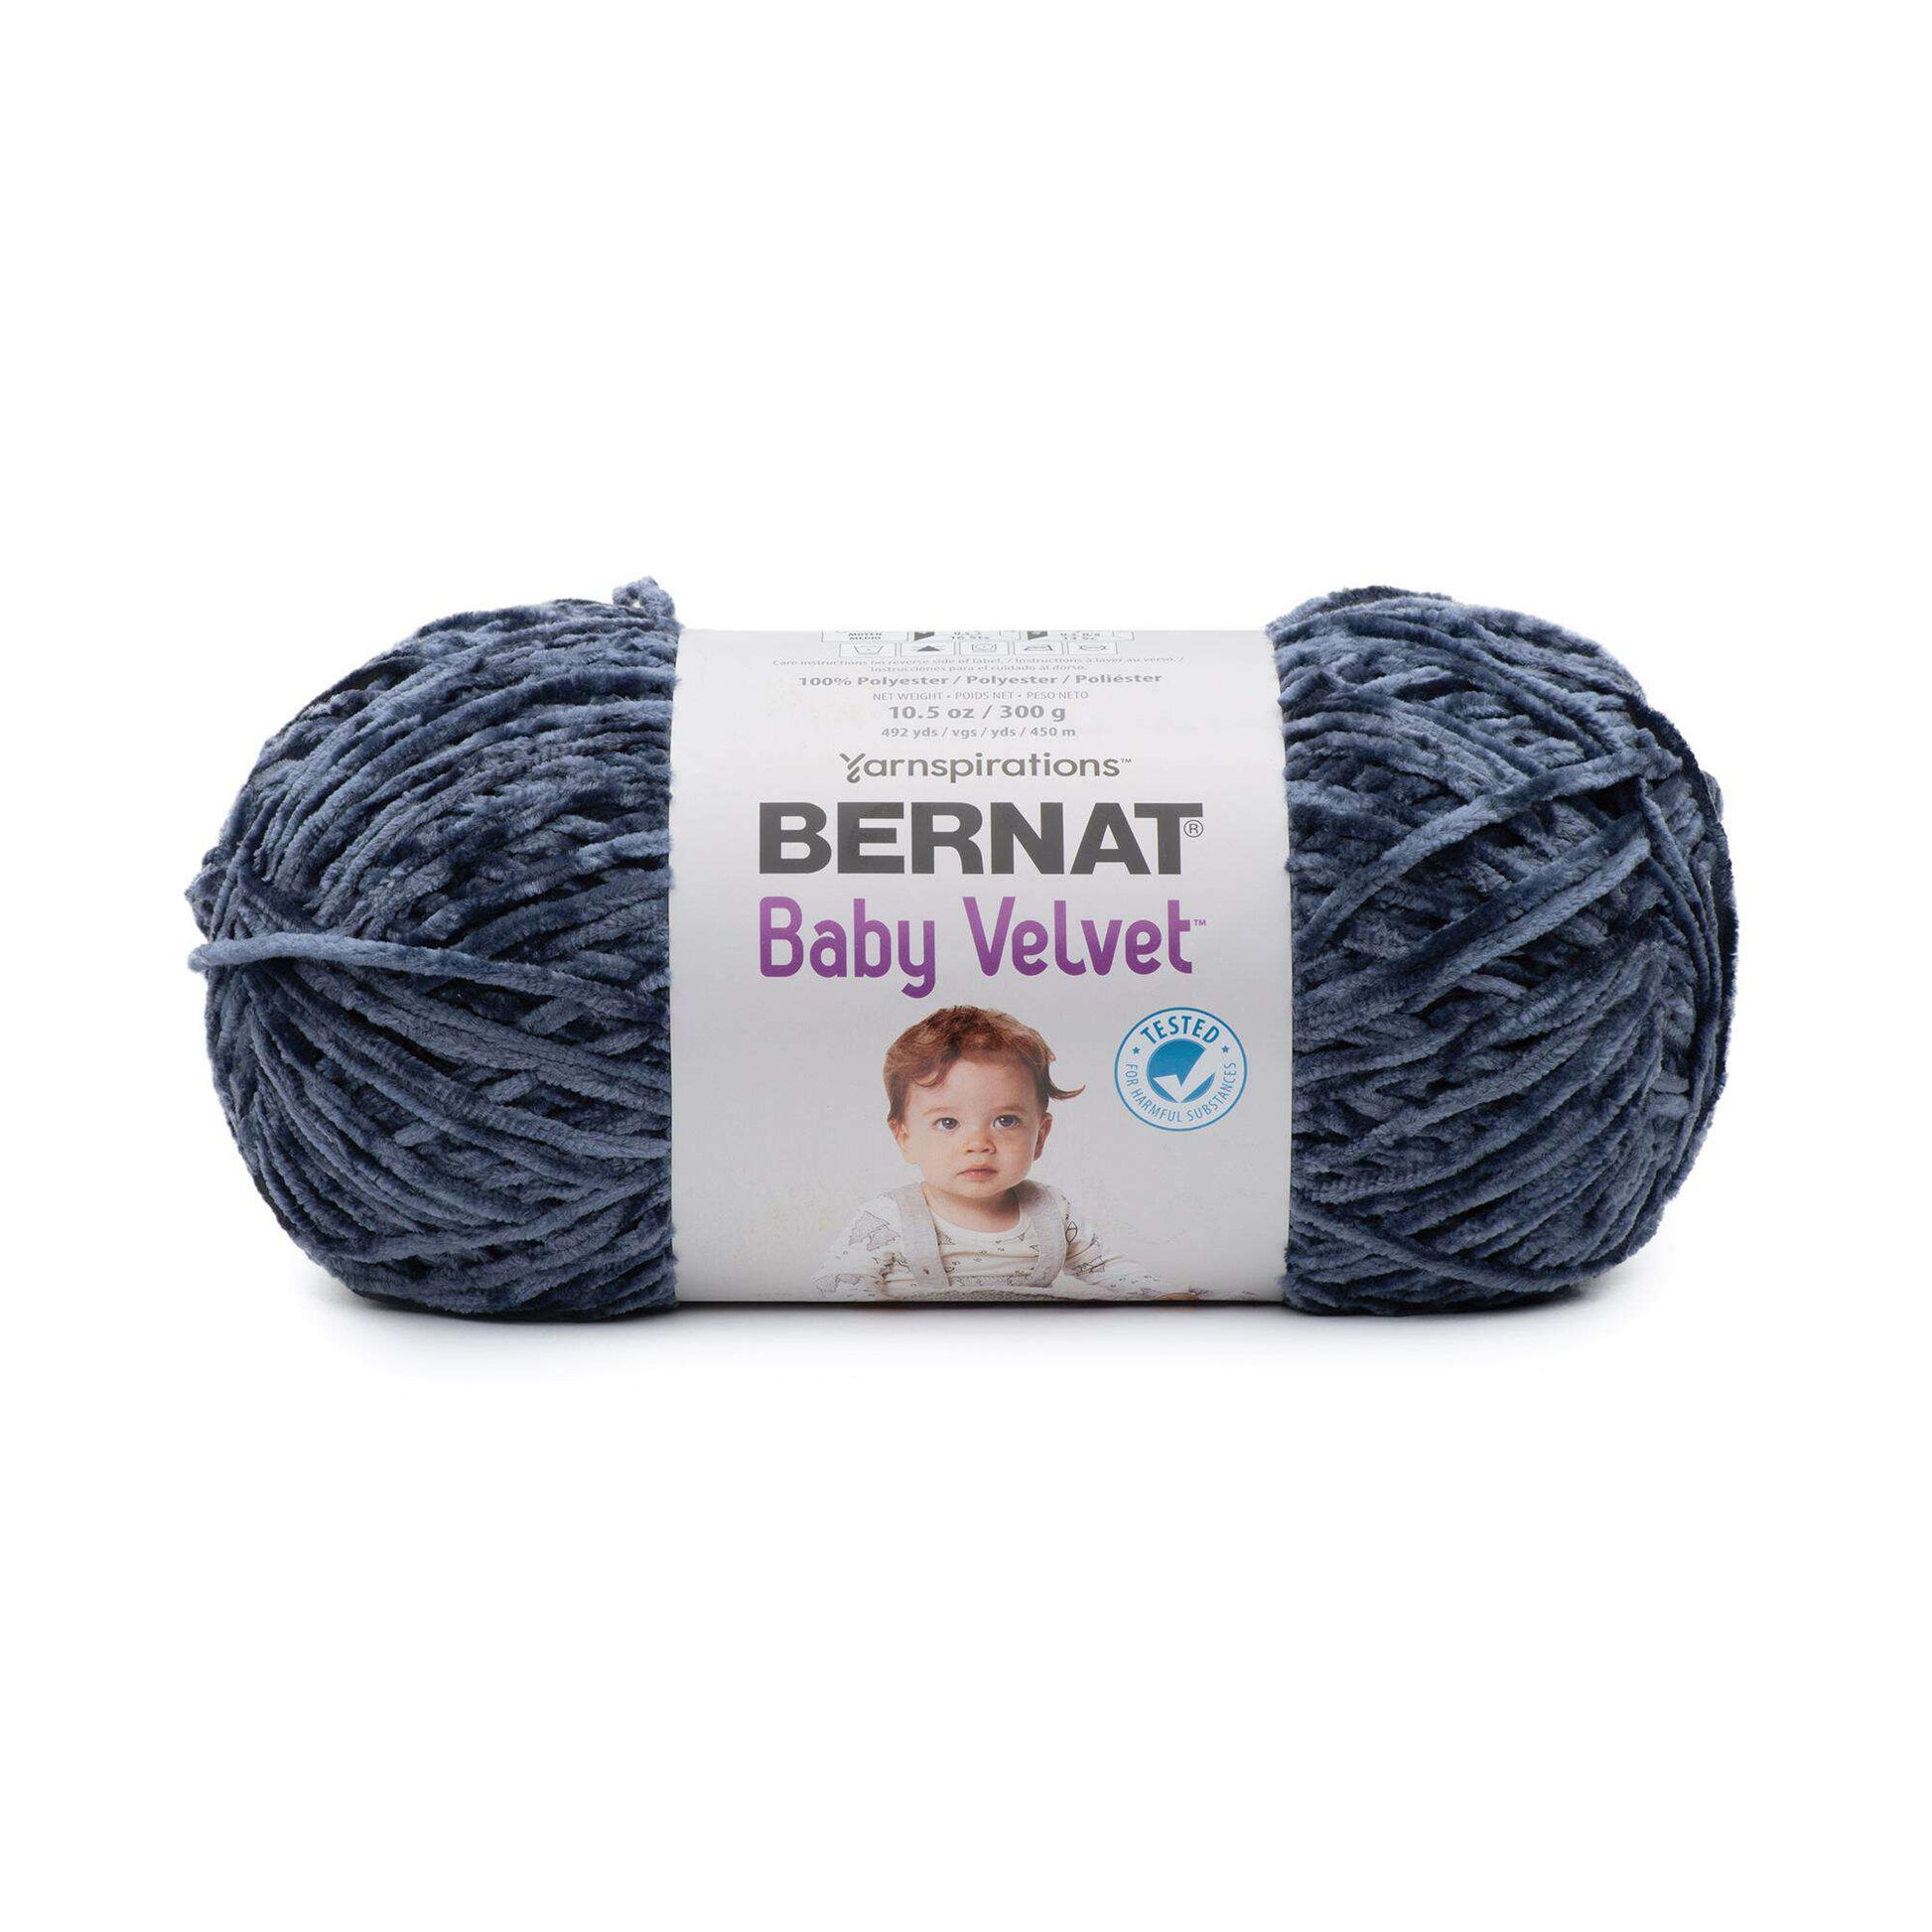 Bernat Baby Velvet Yarn (300g/10.5oz) - Clearance Shades*